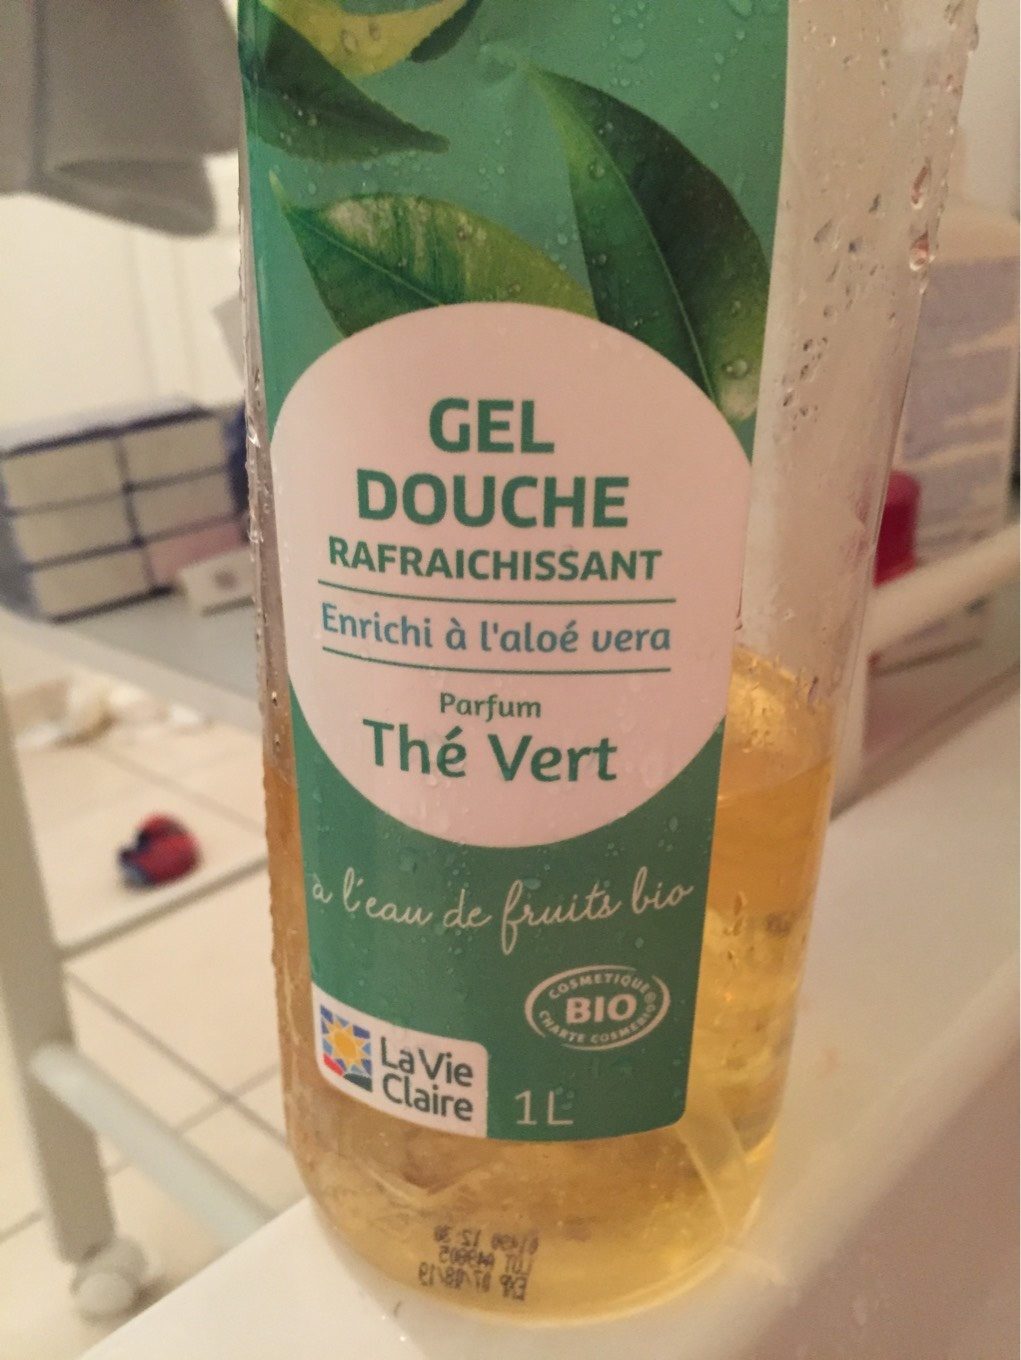 Gel douche the vert - Product - fr